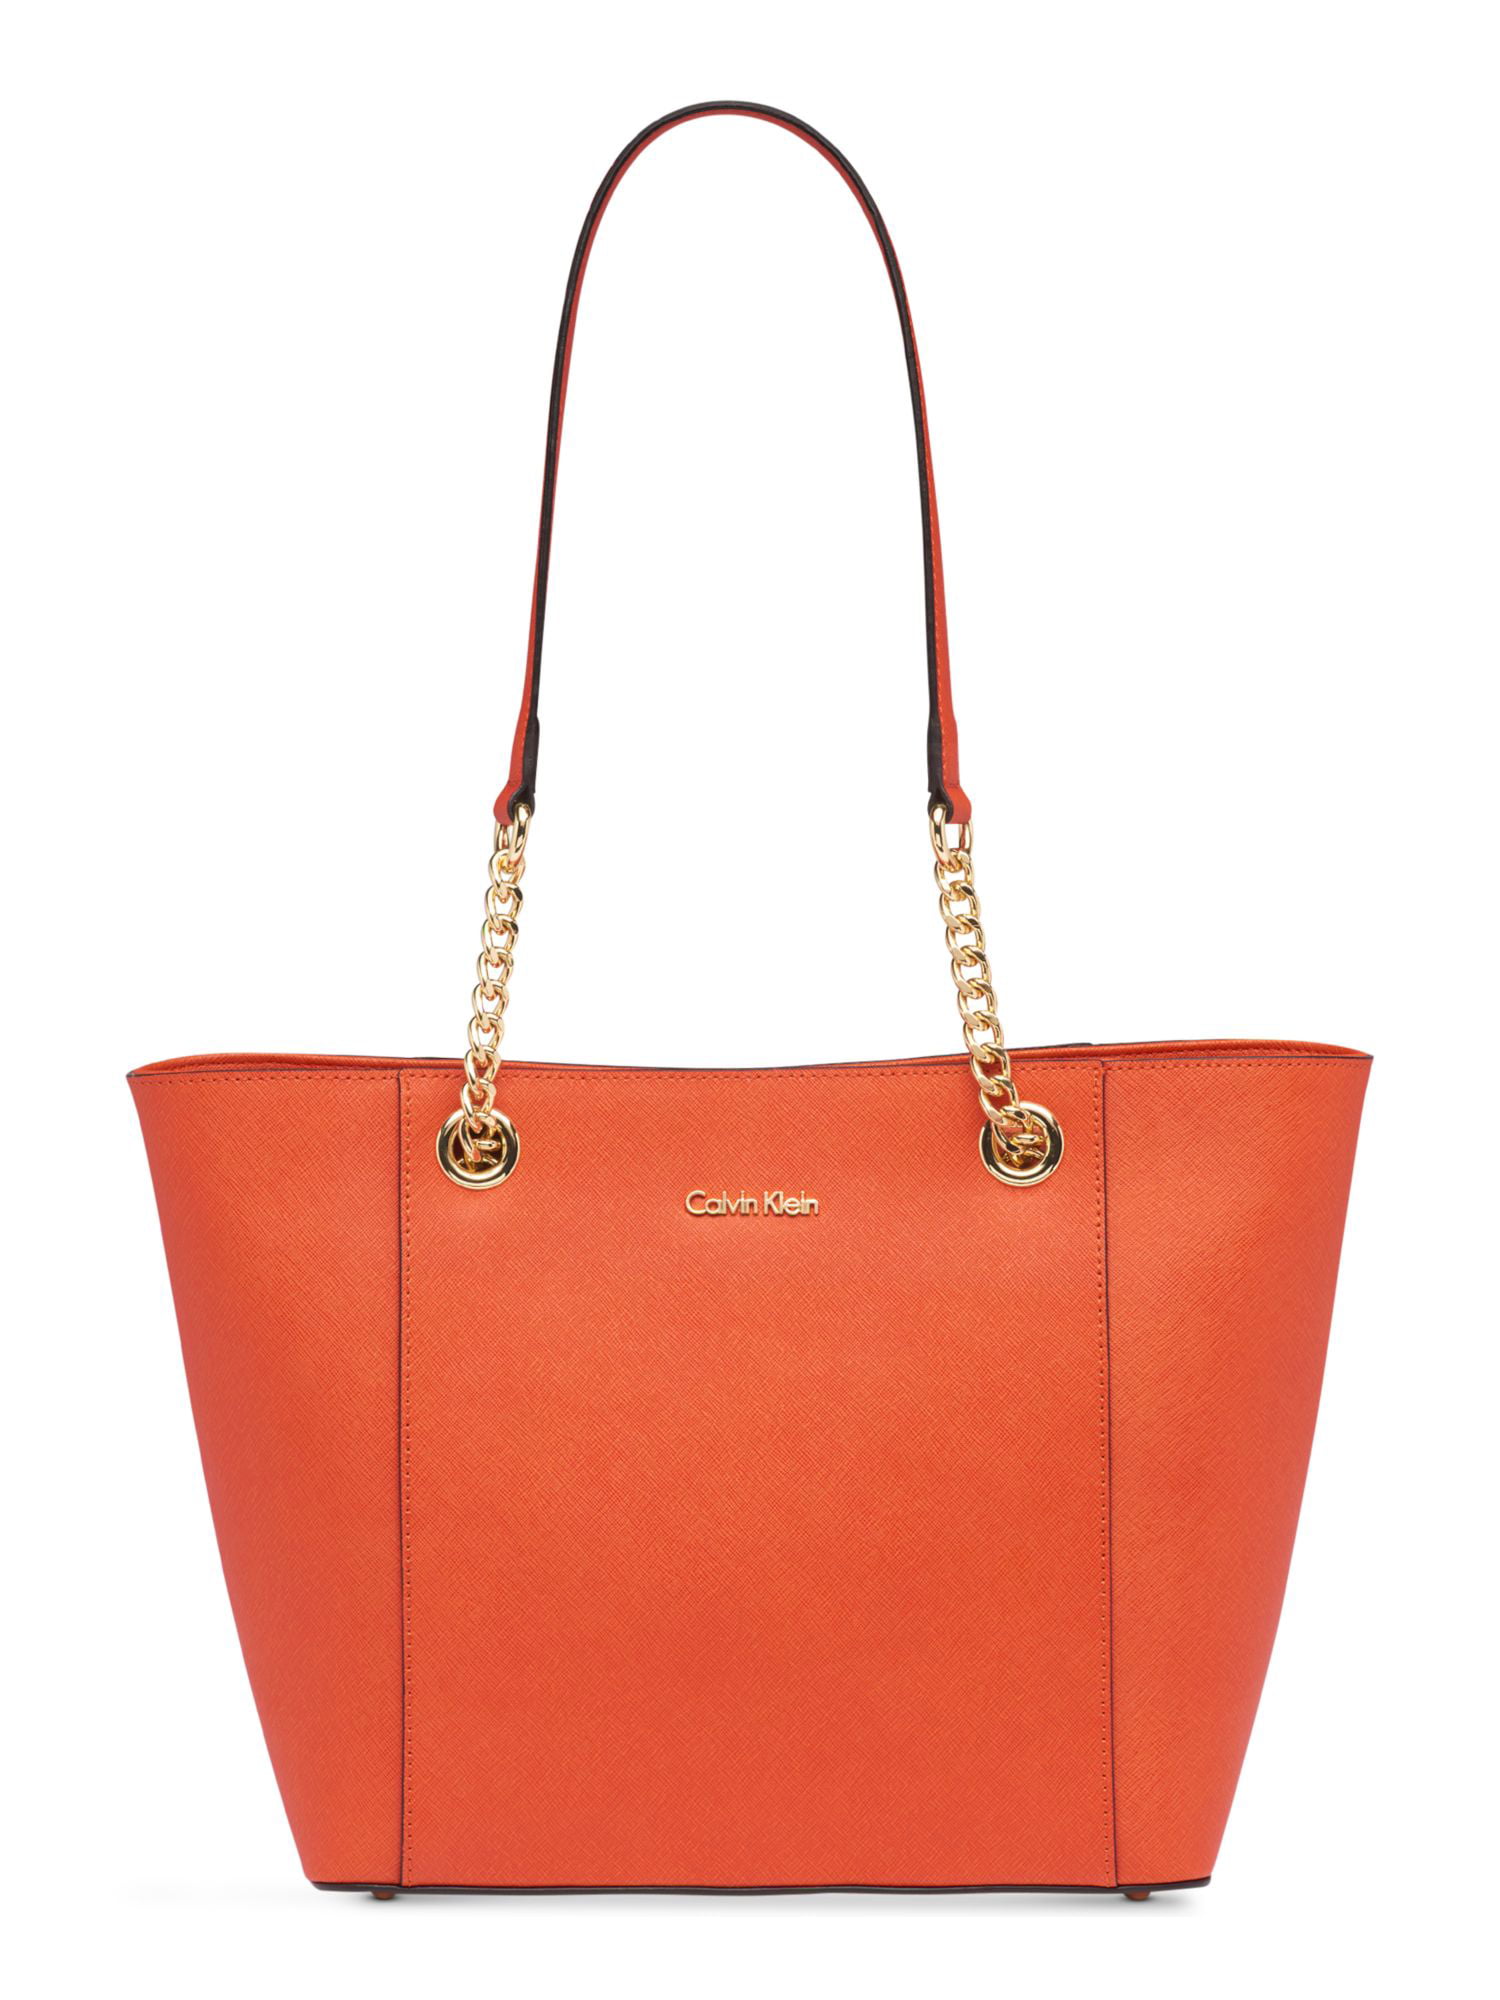 CALVIN KLEIN Orange Leather Tote Handbag Purse 